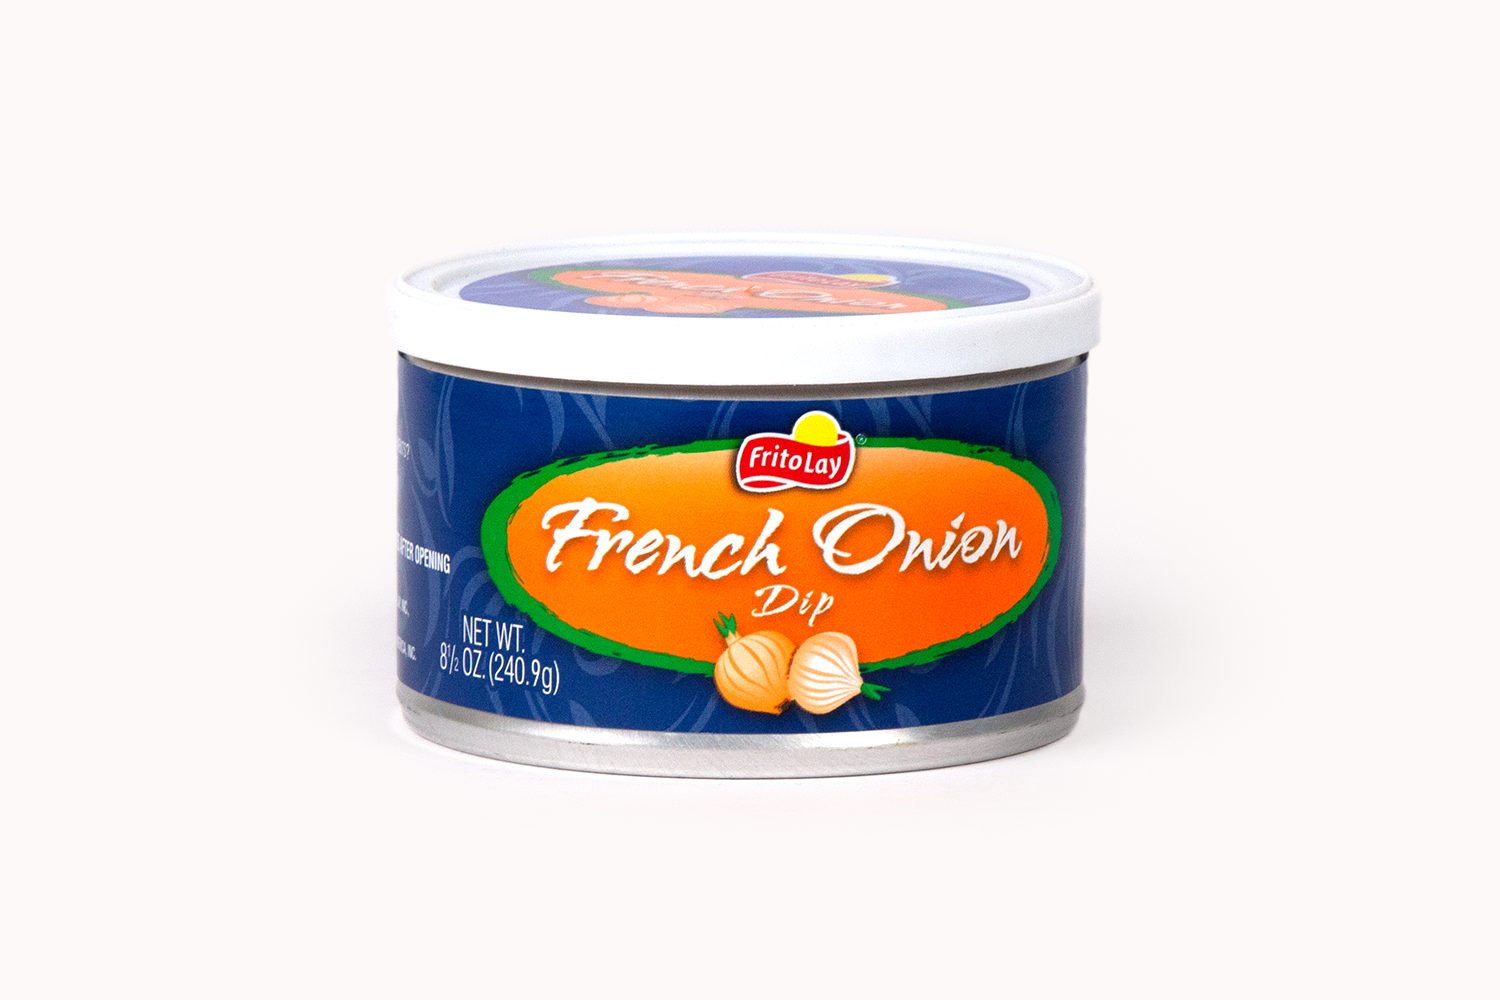 Fritos Lay French Onion Dip